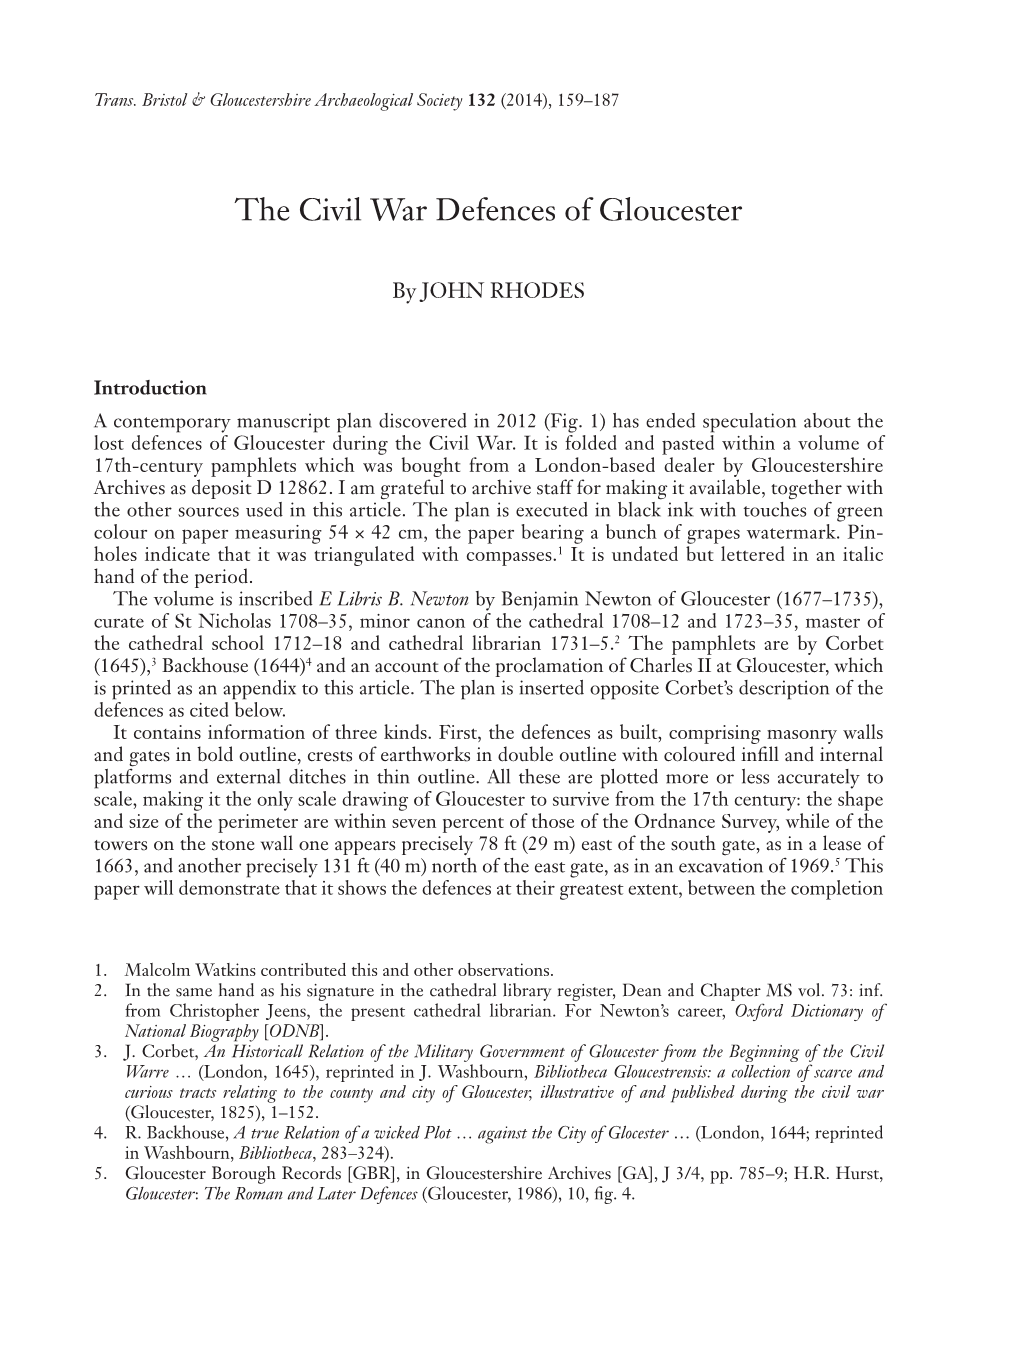 The Civil War Defences of Gloucester